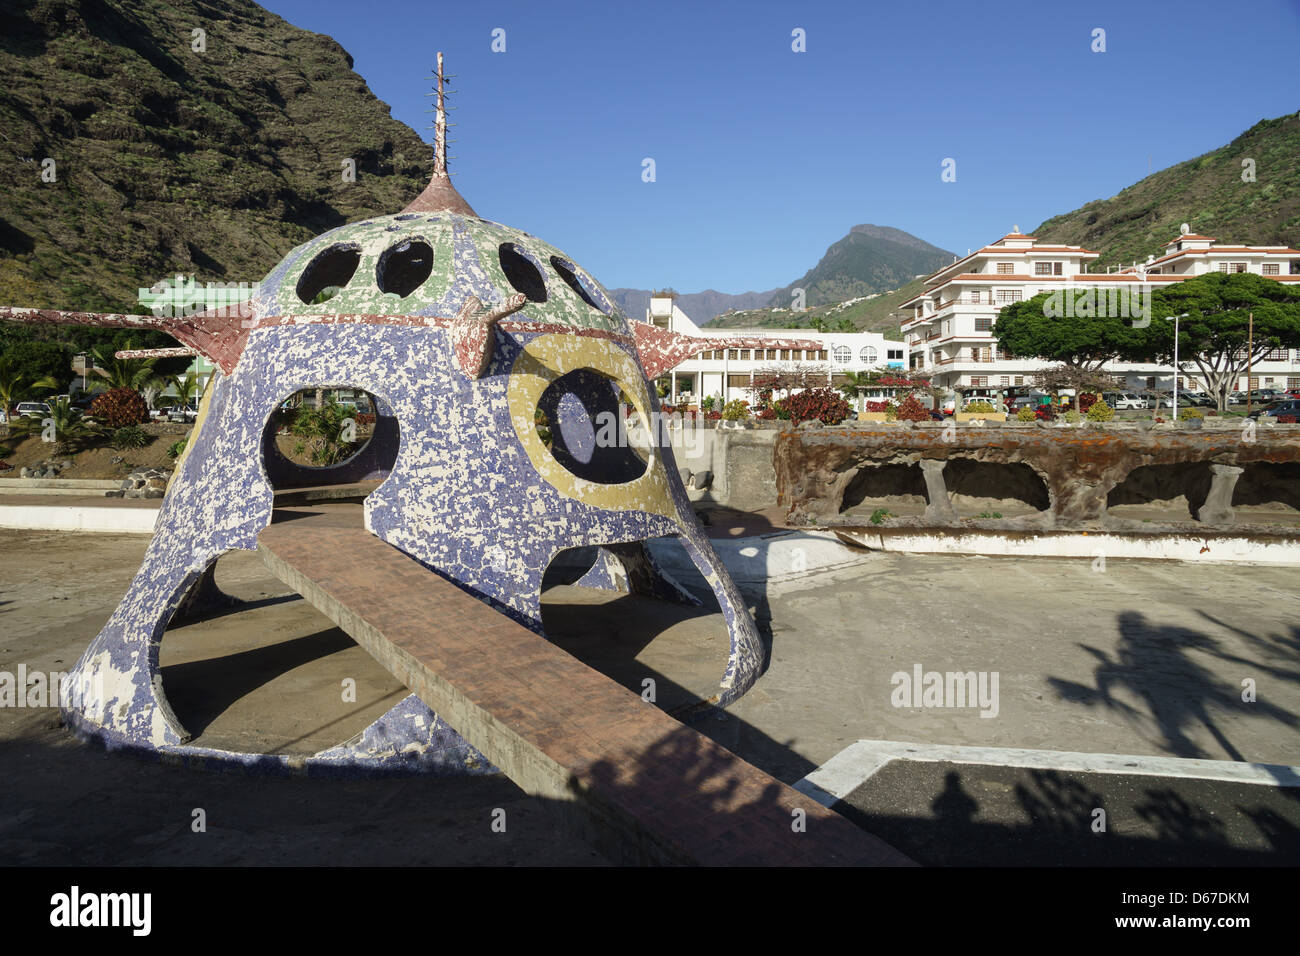 Puerto de Tazacorte, west side of La Palma fishing and tourist coastal town. Old mosaic water park semi-derelict. Stock Photo